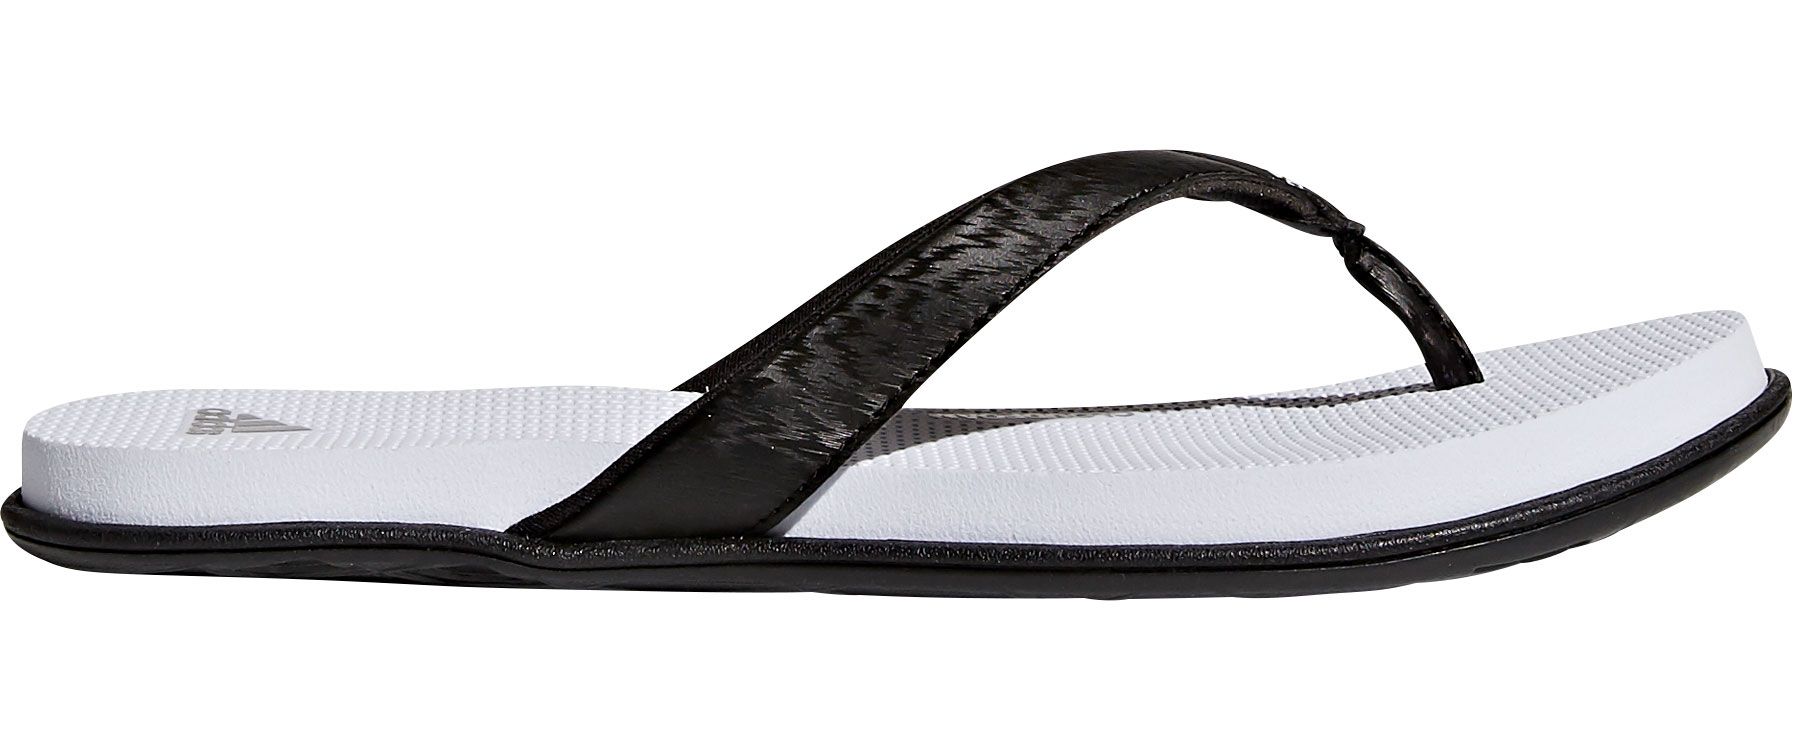 adidas womens flip flop sandals